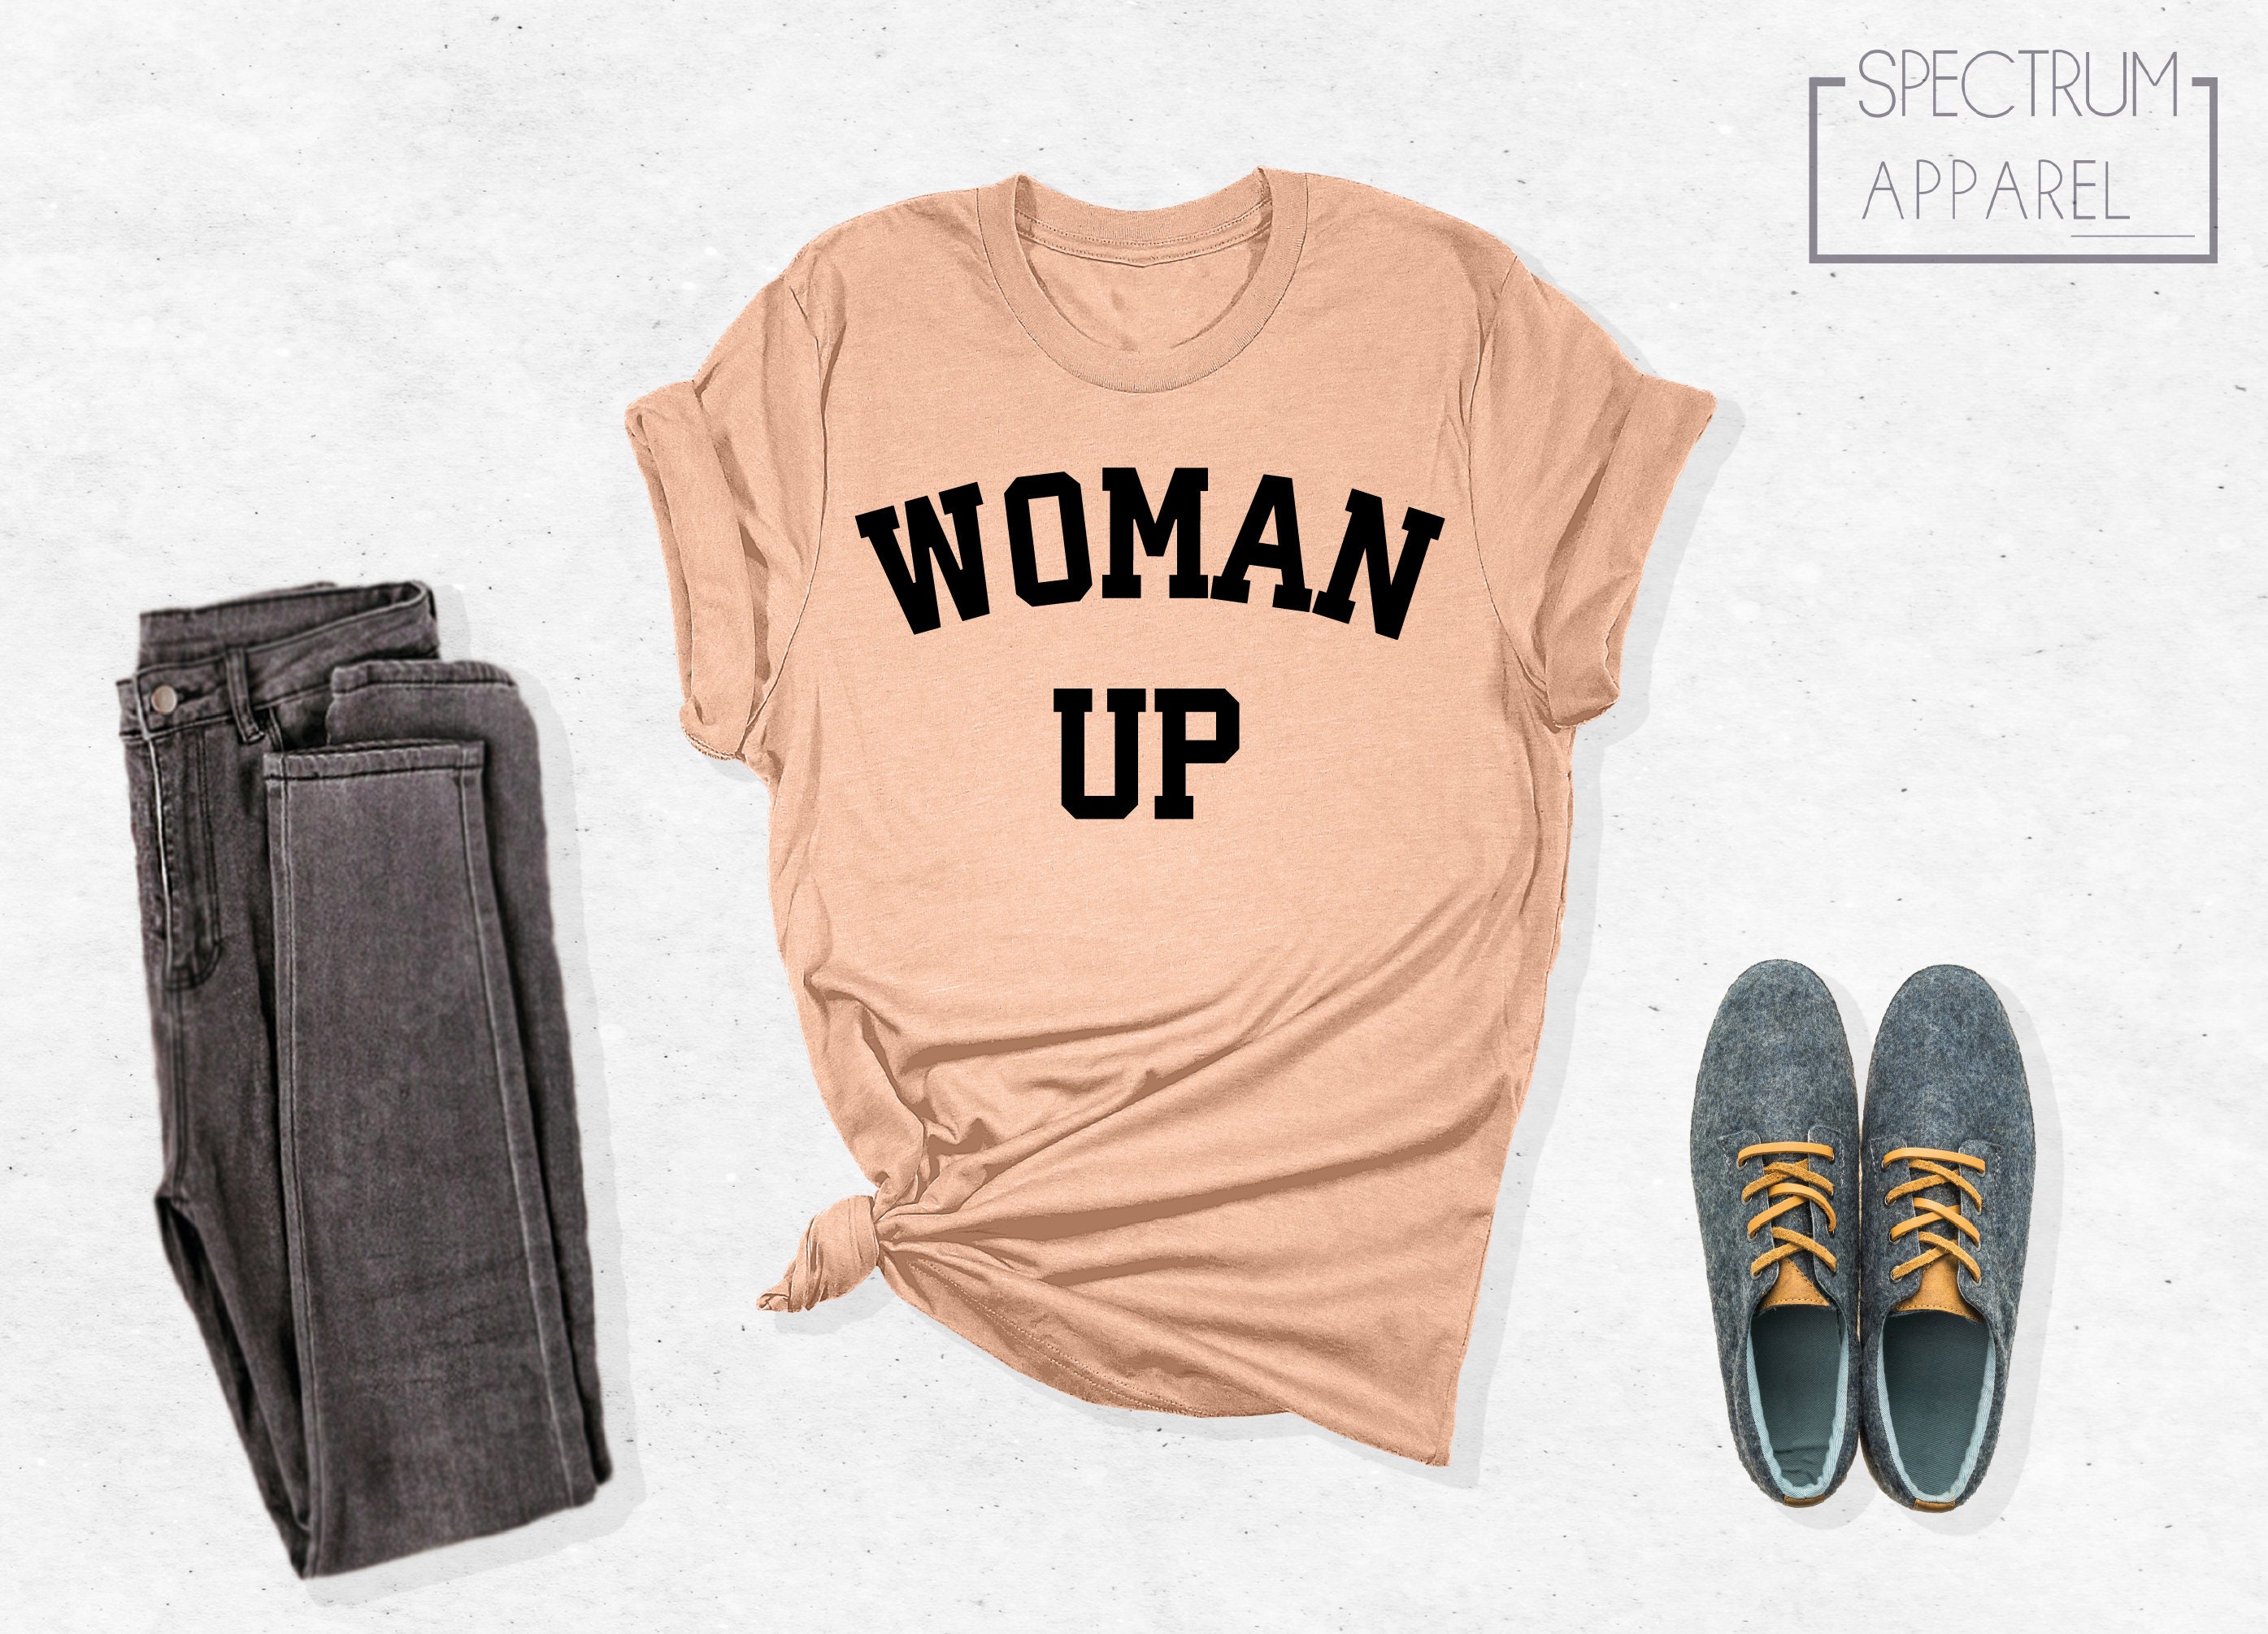 Discover Woman Up Shirt, Woman Up, Feminist Shirt, Women Empowerment, Equality Shirt, Inspirational Shirt, Feminist Gift, Gift for Her